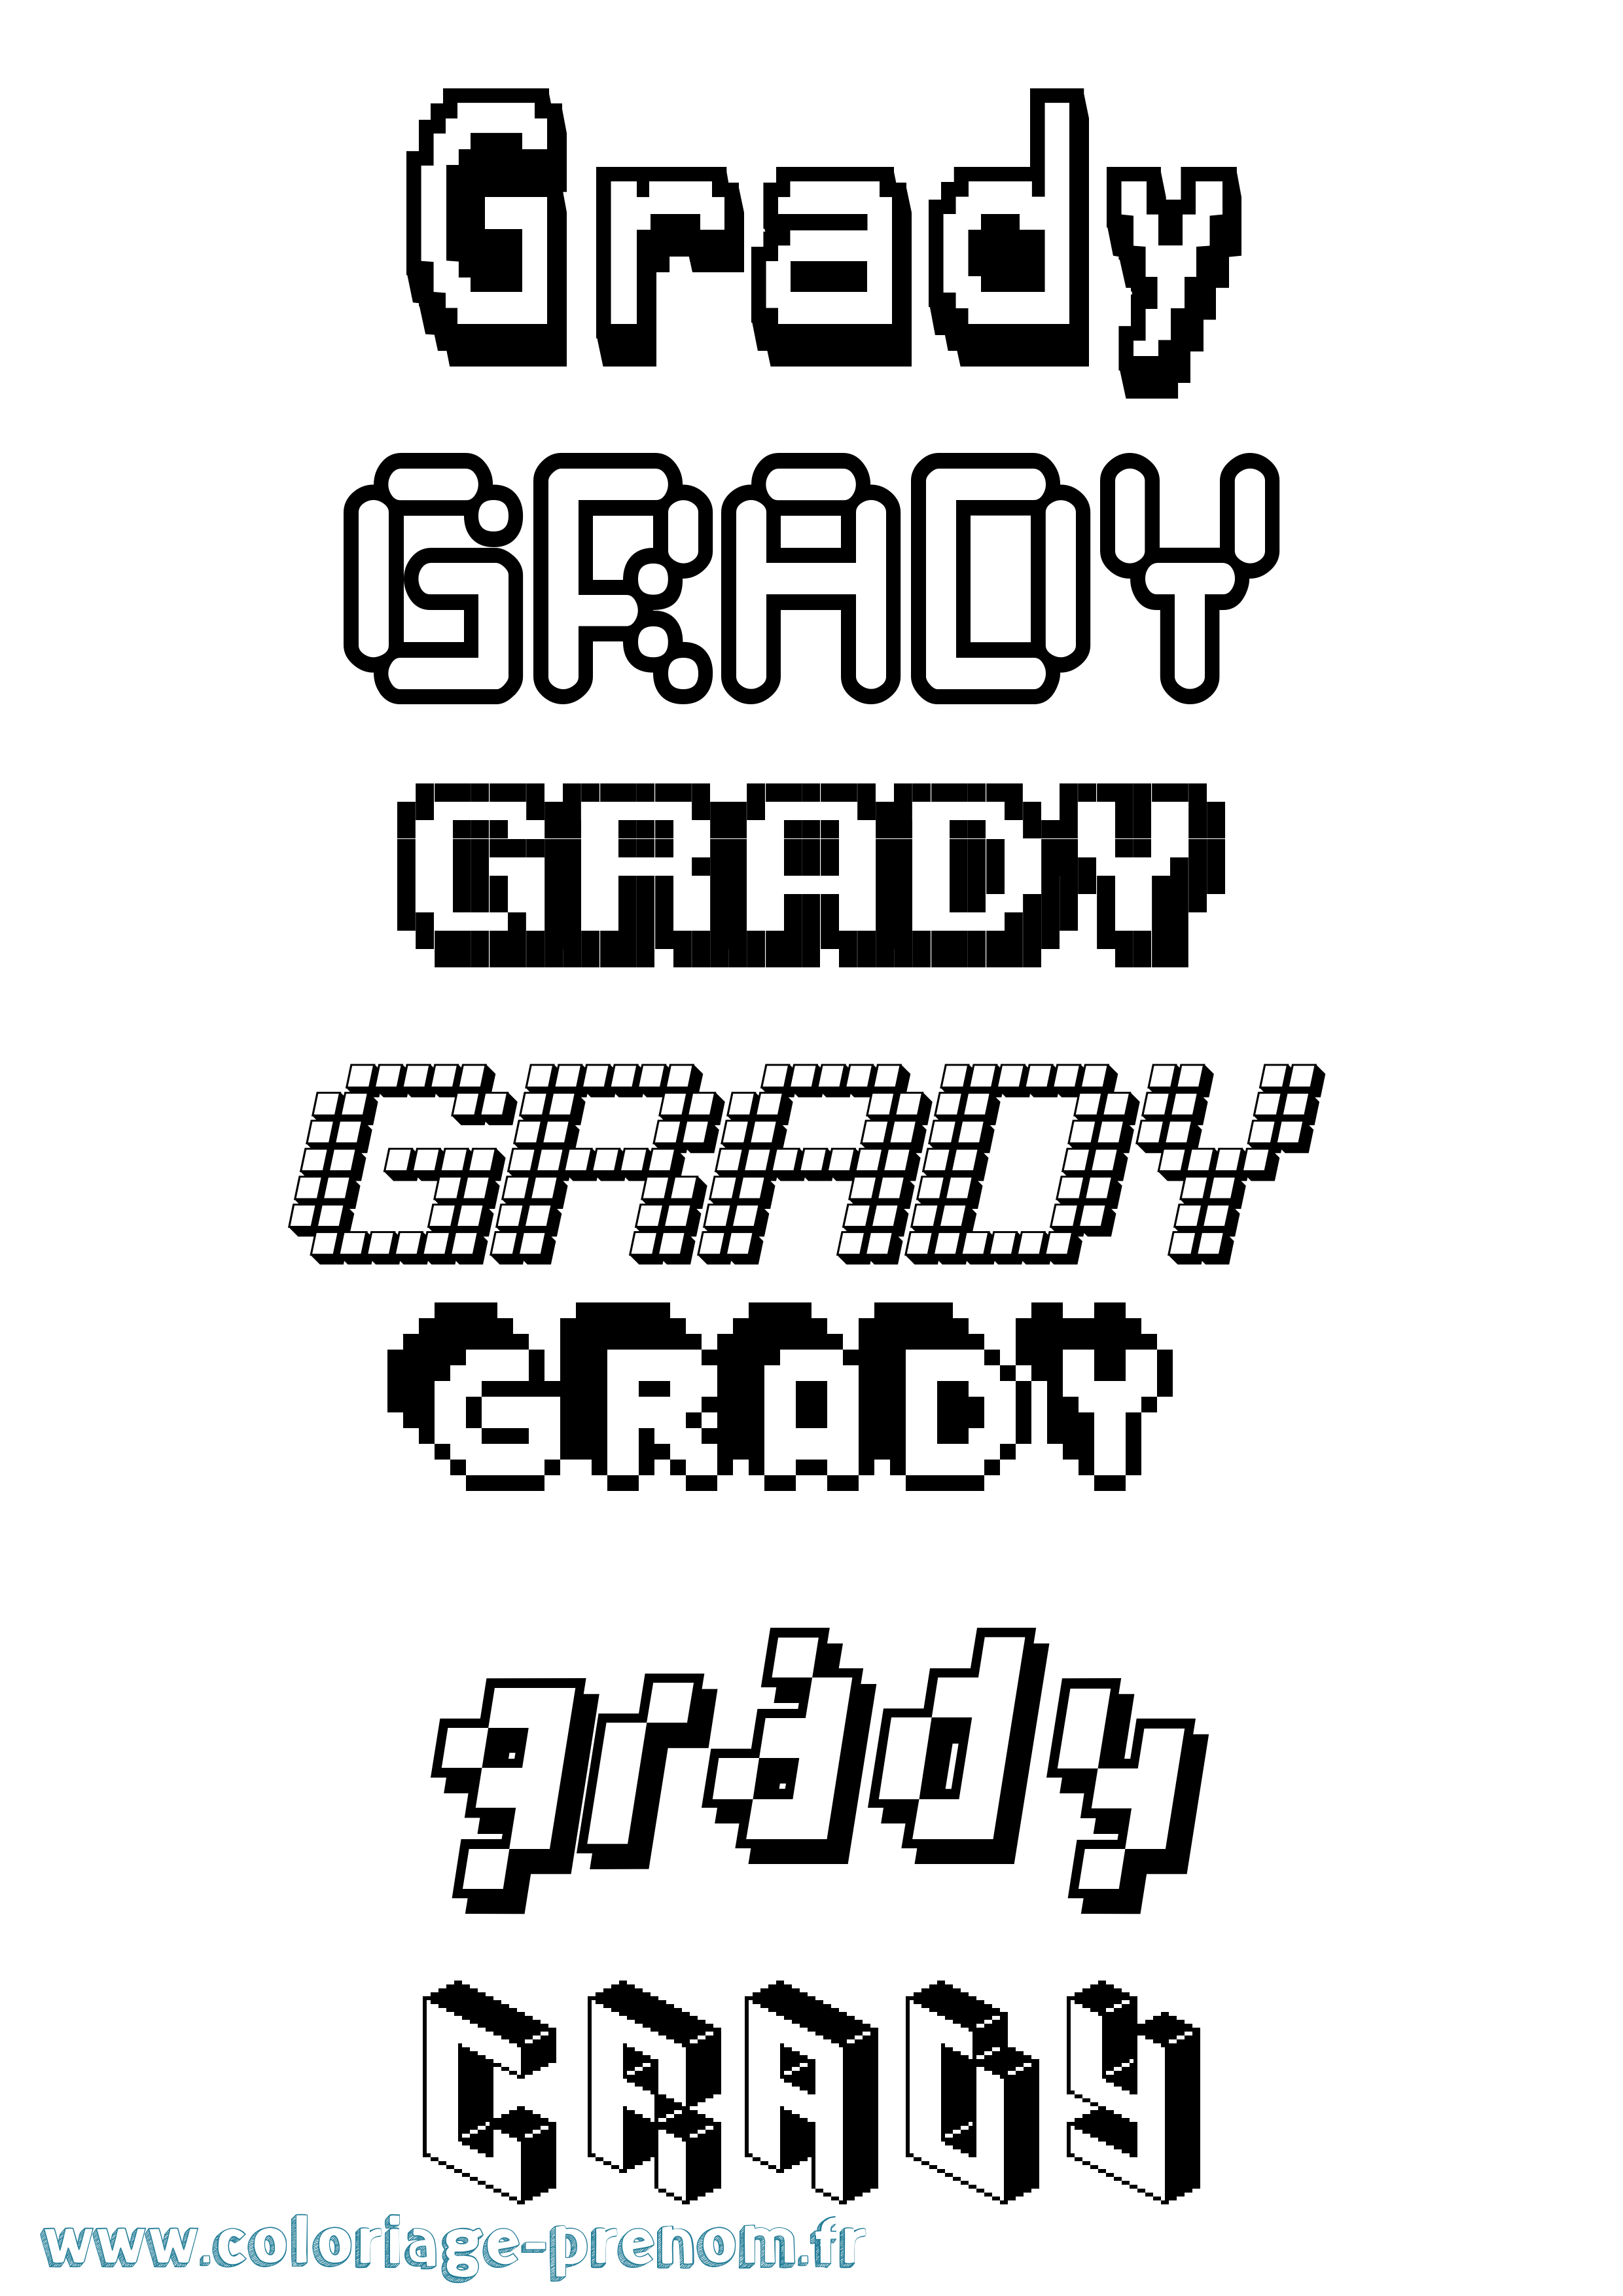 Coloriage prénom Grady Pixel